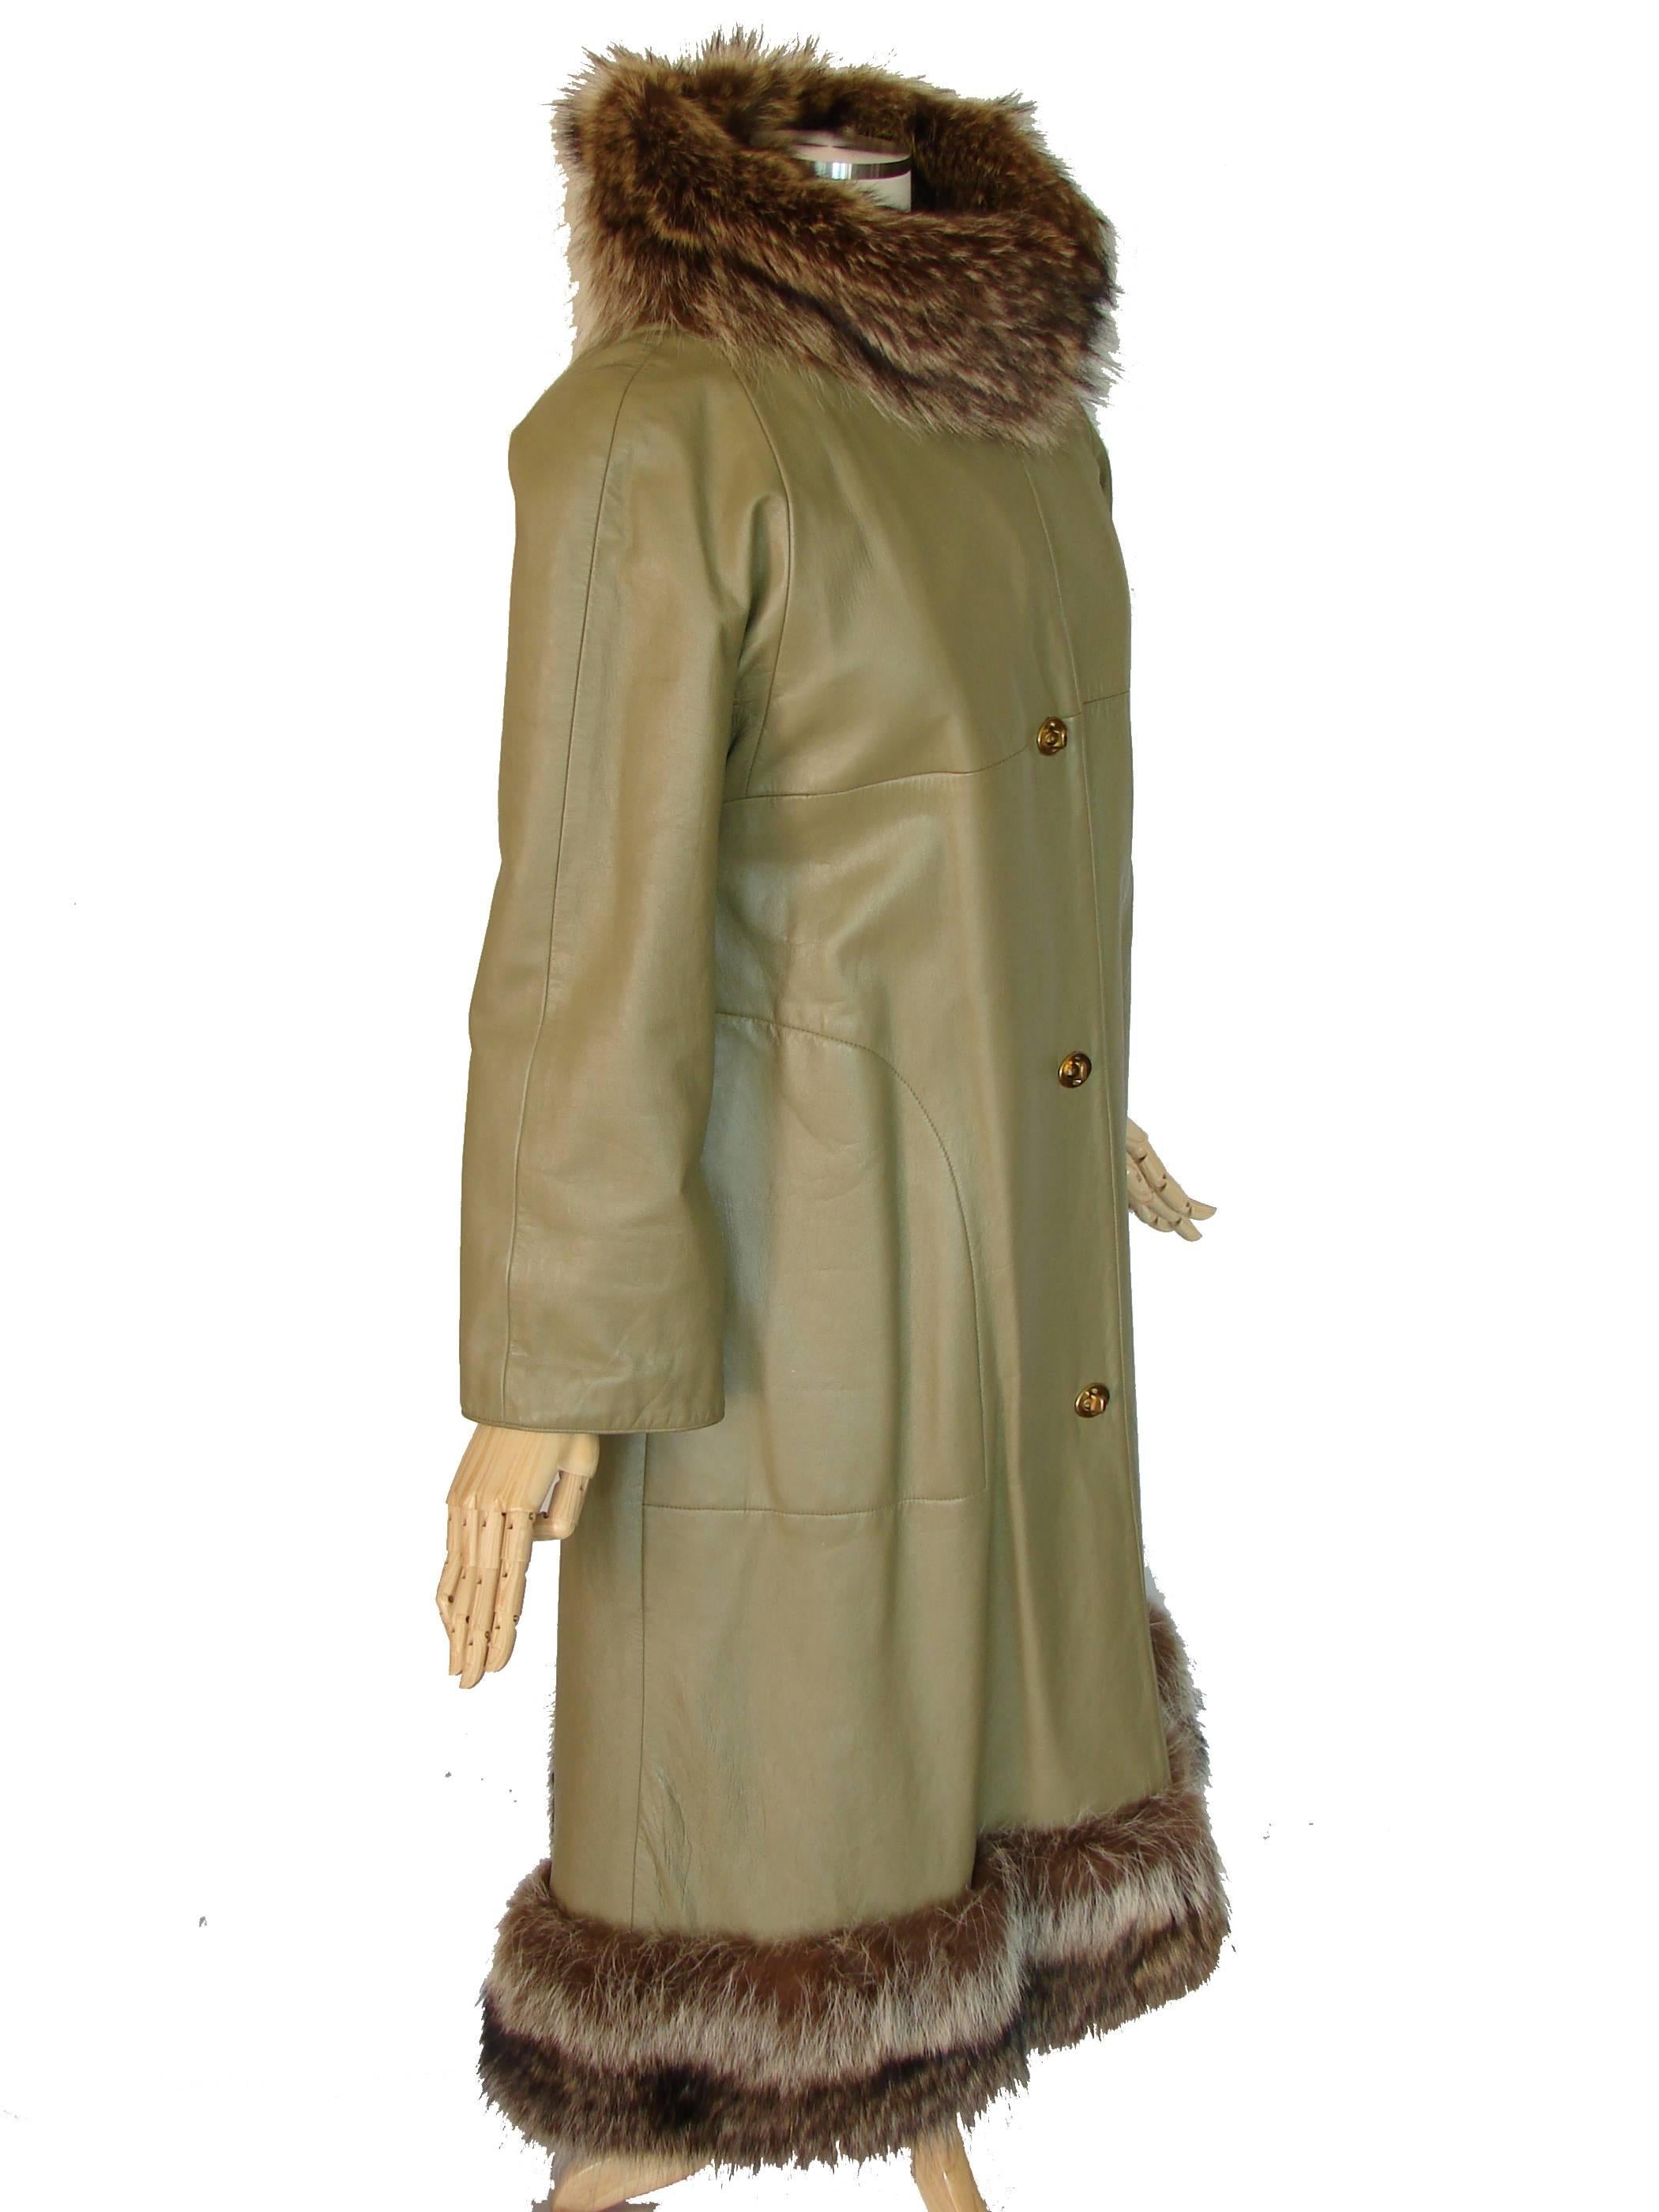 Brown Bonnie Cashin for Sills Leather Swing Coat with Raccoon Fur Trim 1960s Sz M